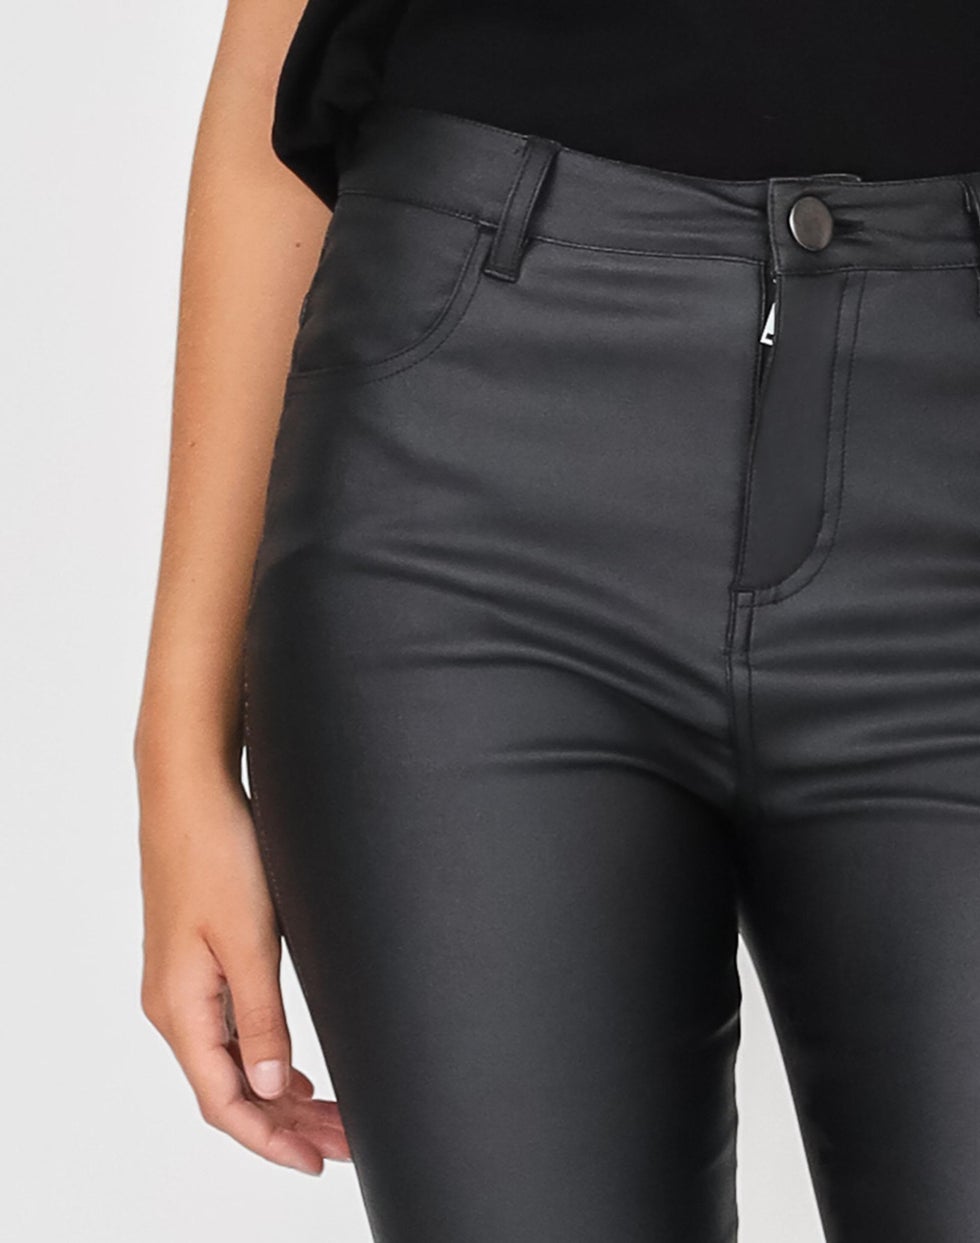 High Rise Leather Look Pant - Black - Pants - Full Length - Women's ...